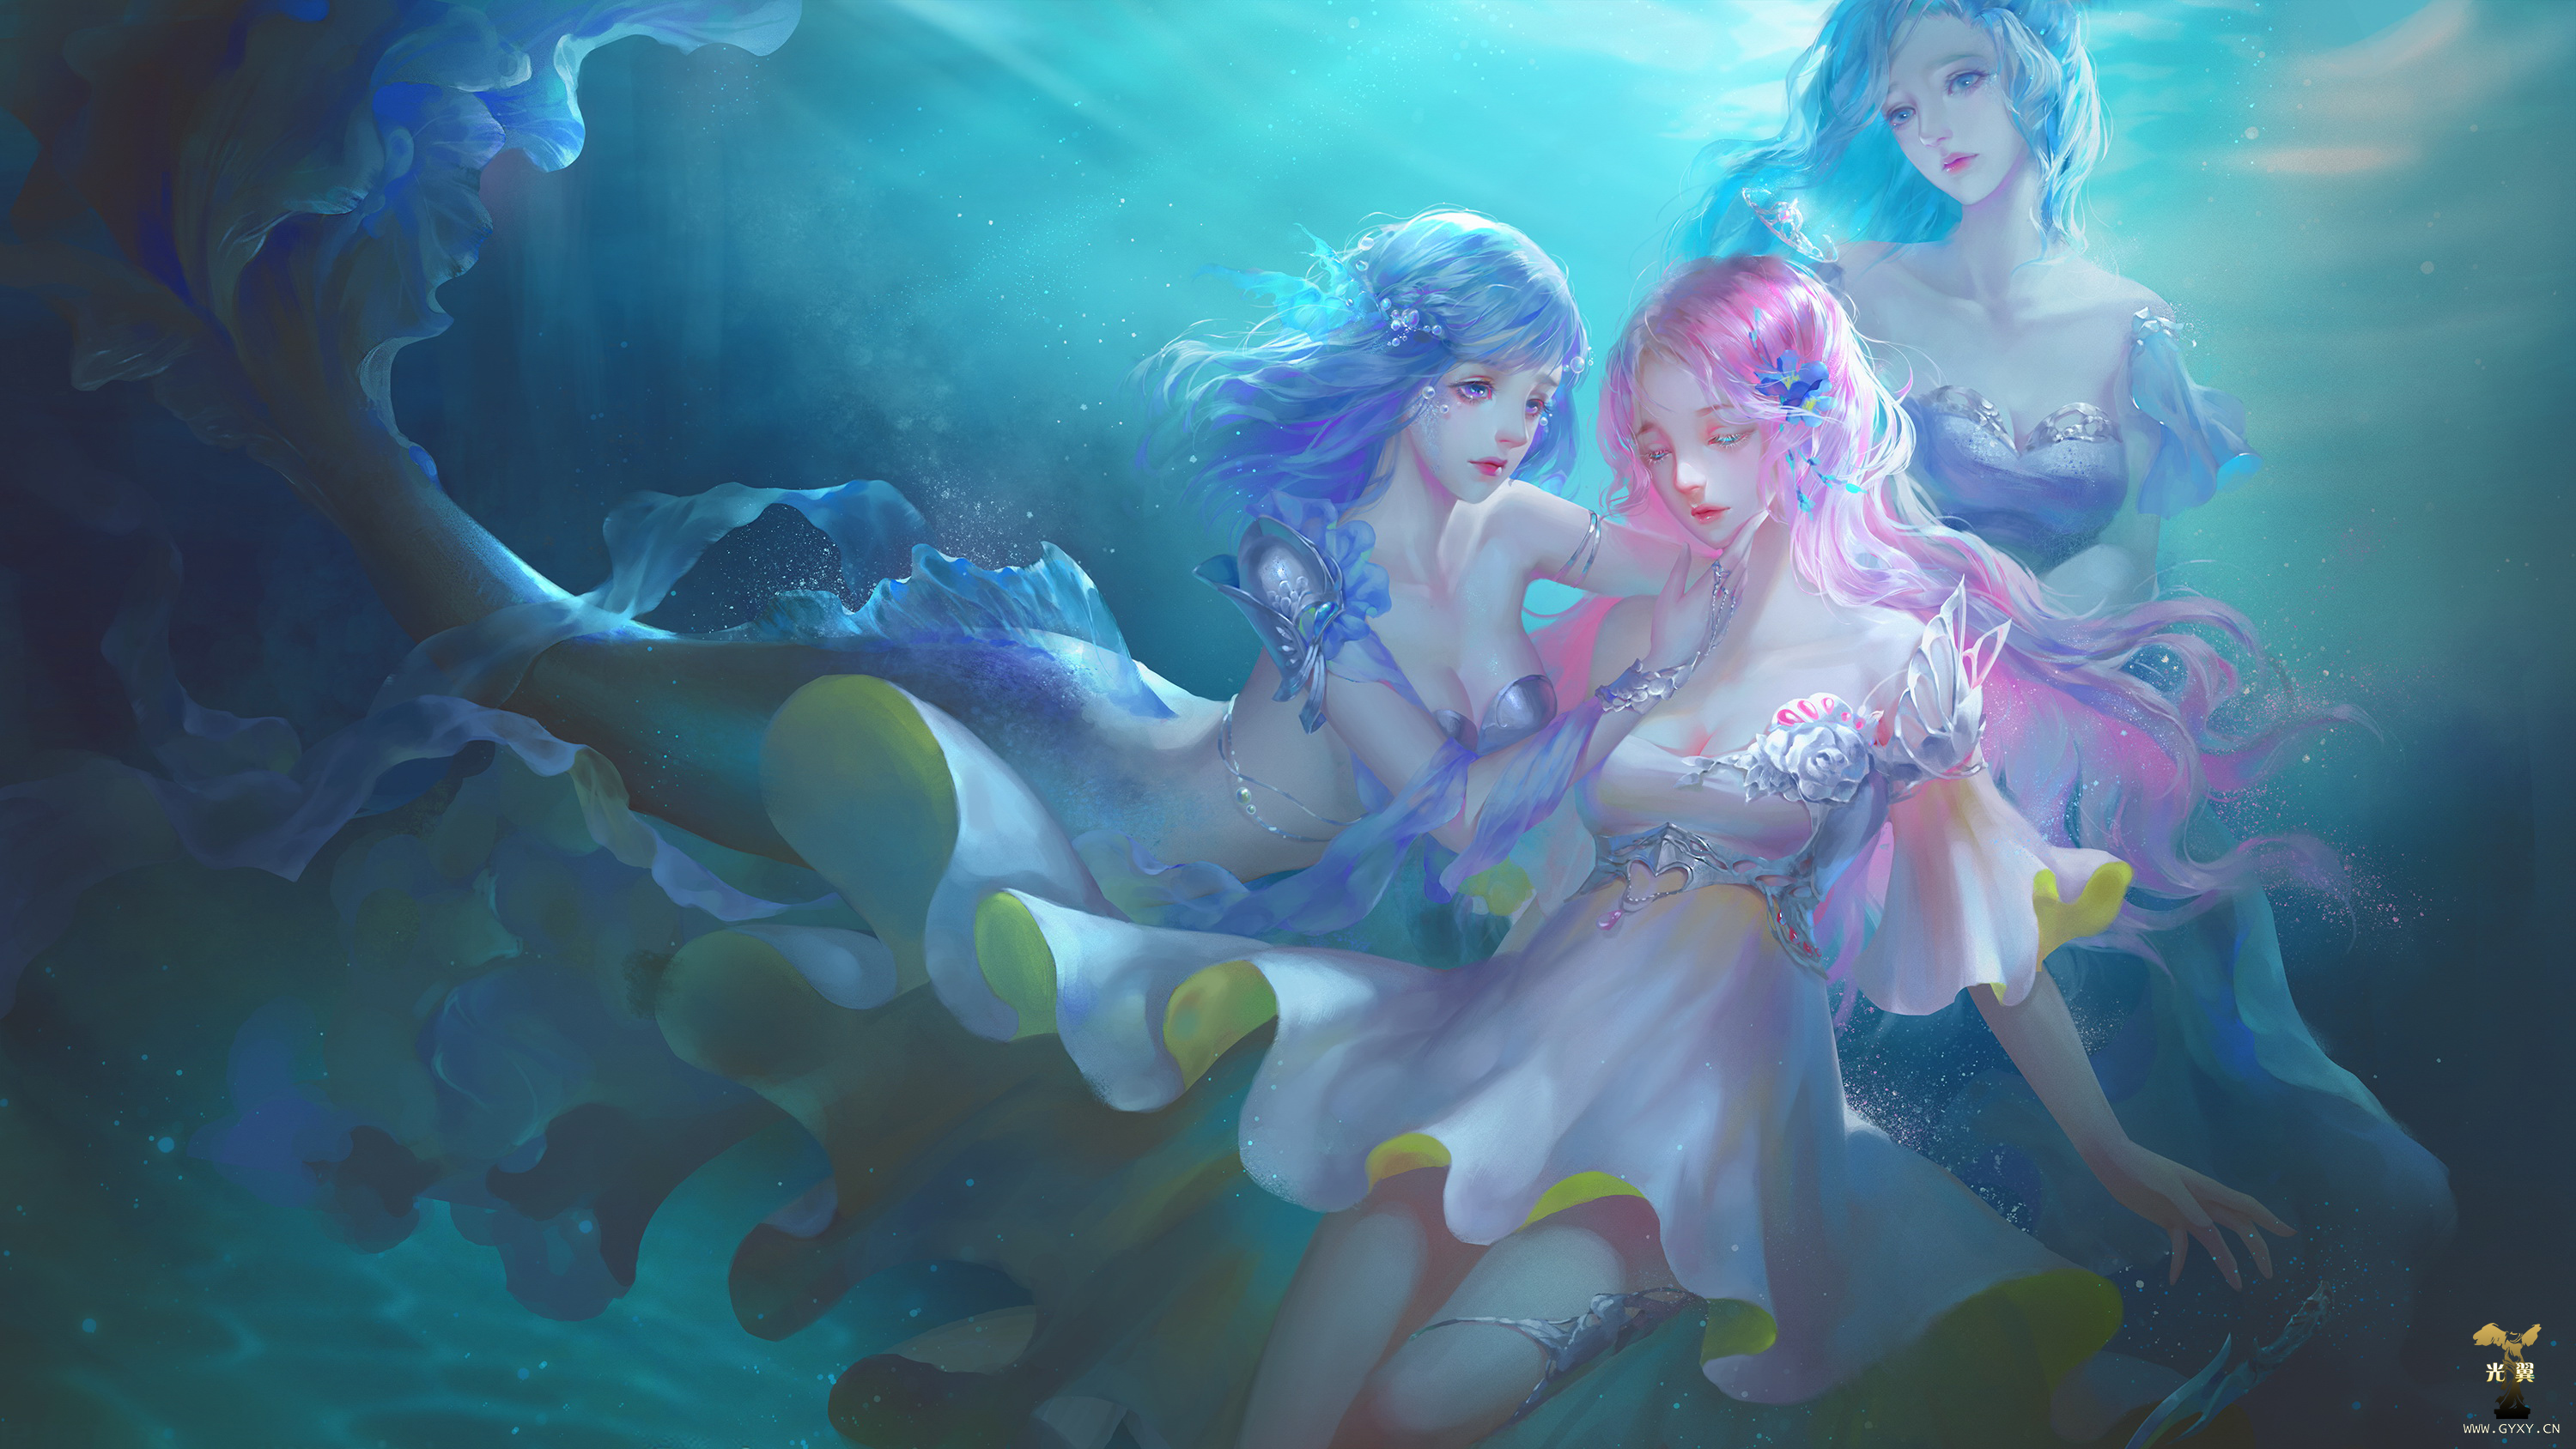 974445 Bild herunterladen animes, the mermaid, aqua haar, blaue haare, meerjungfrau, pinkes haar, unterwasser - Hintergrundbilder und Bildschirmschoner kostenlos